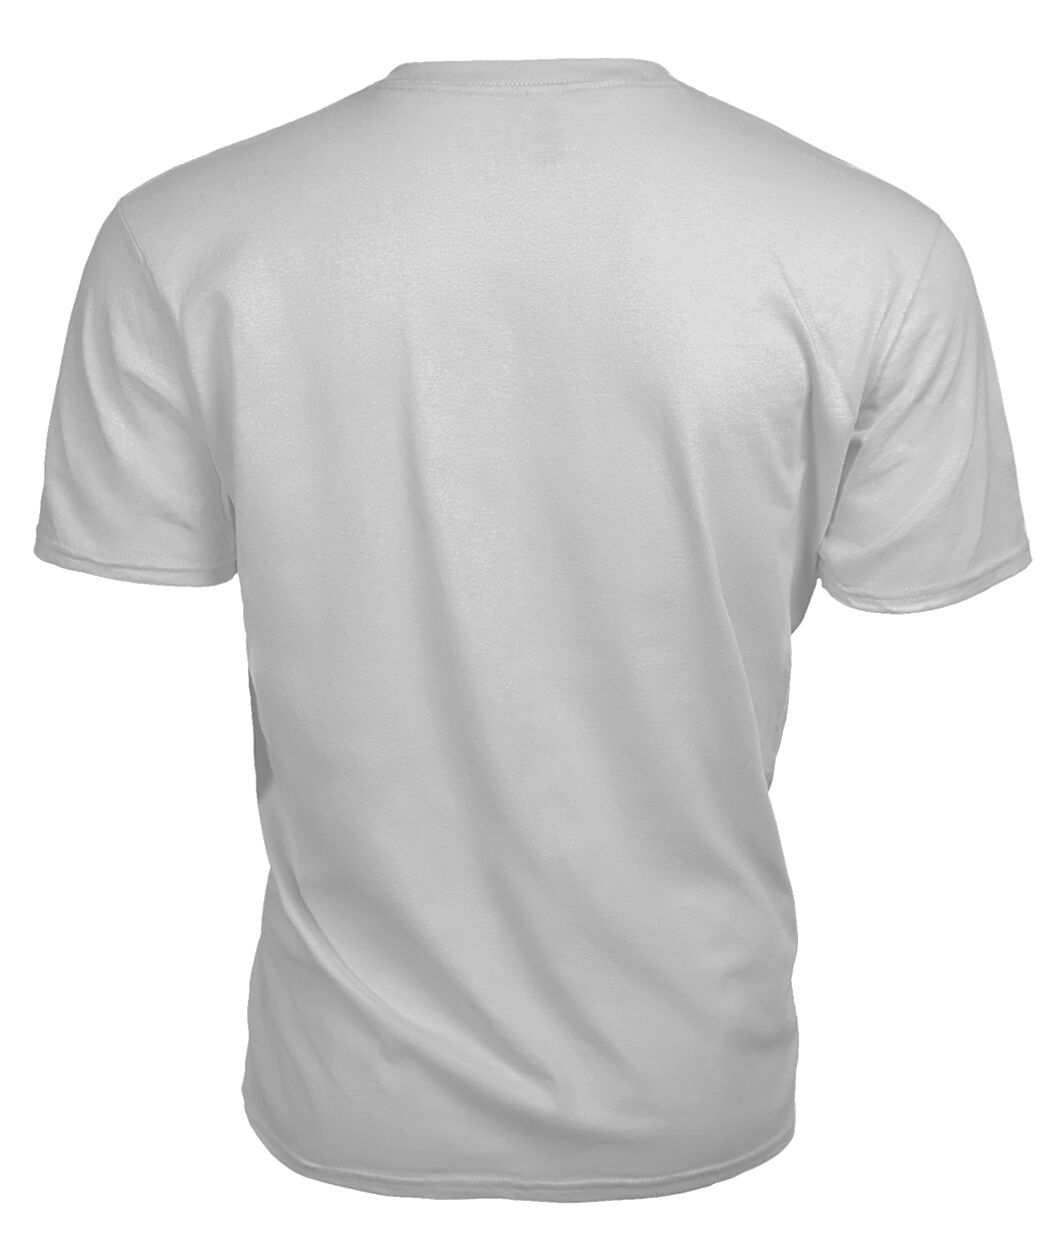 Davidson Family Tartan - 2D T-shirt